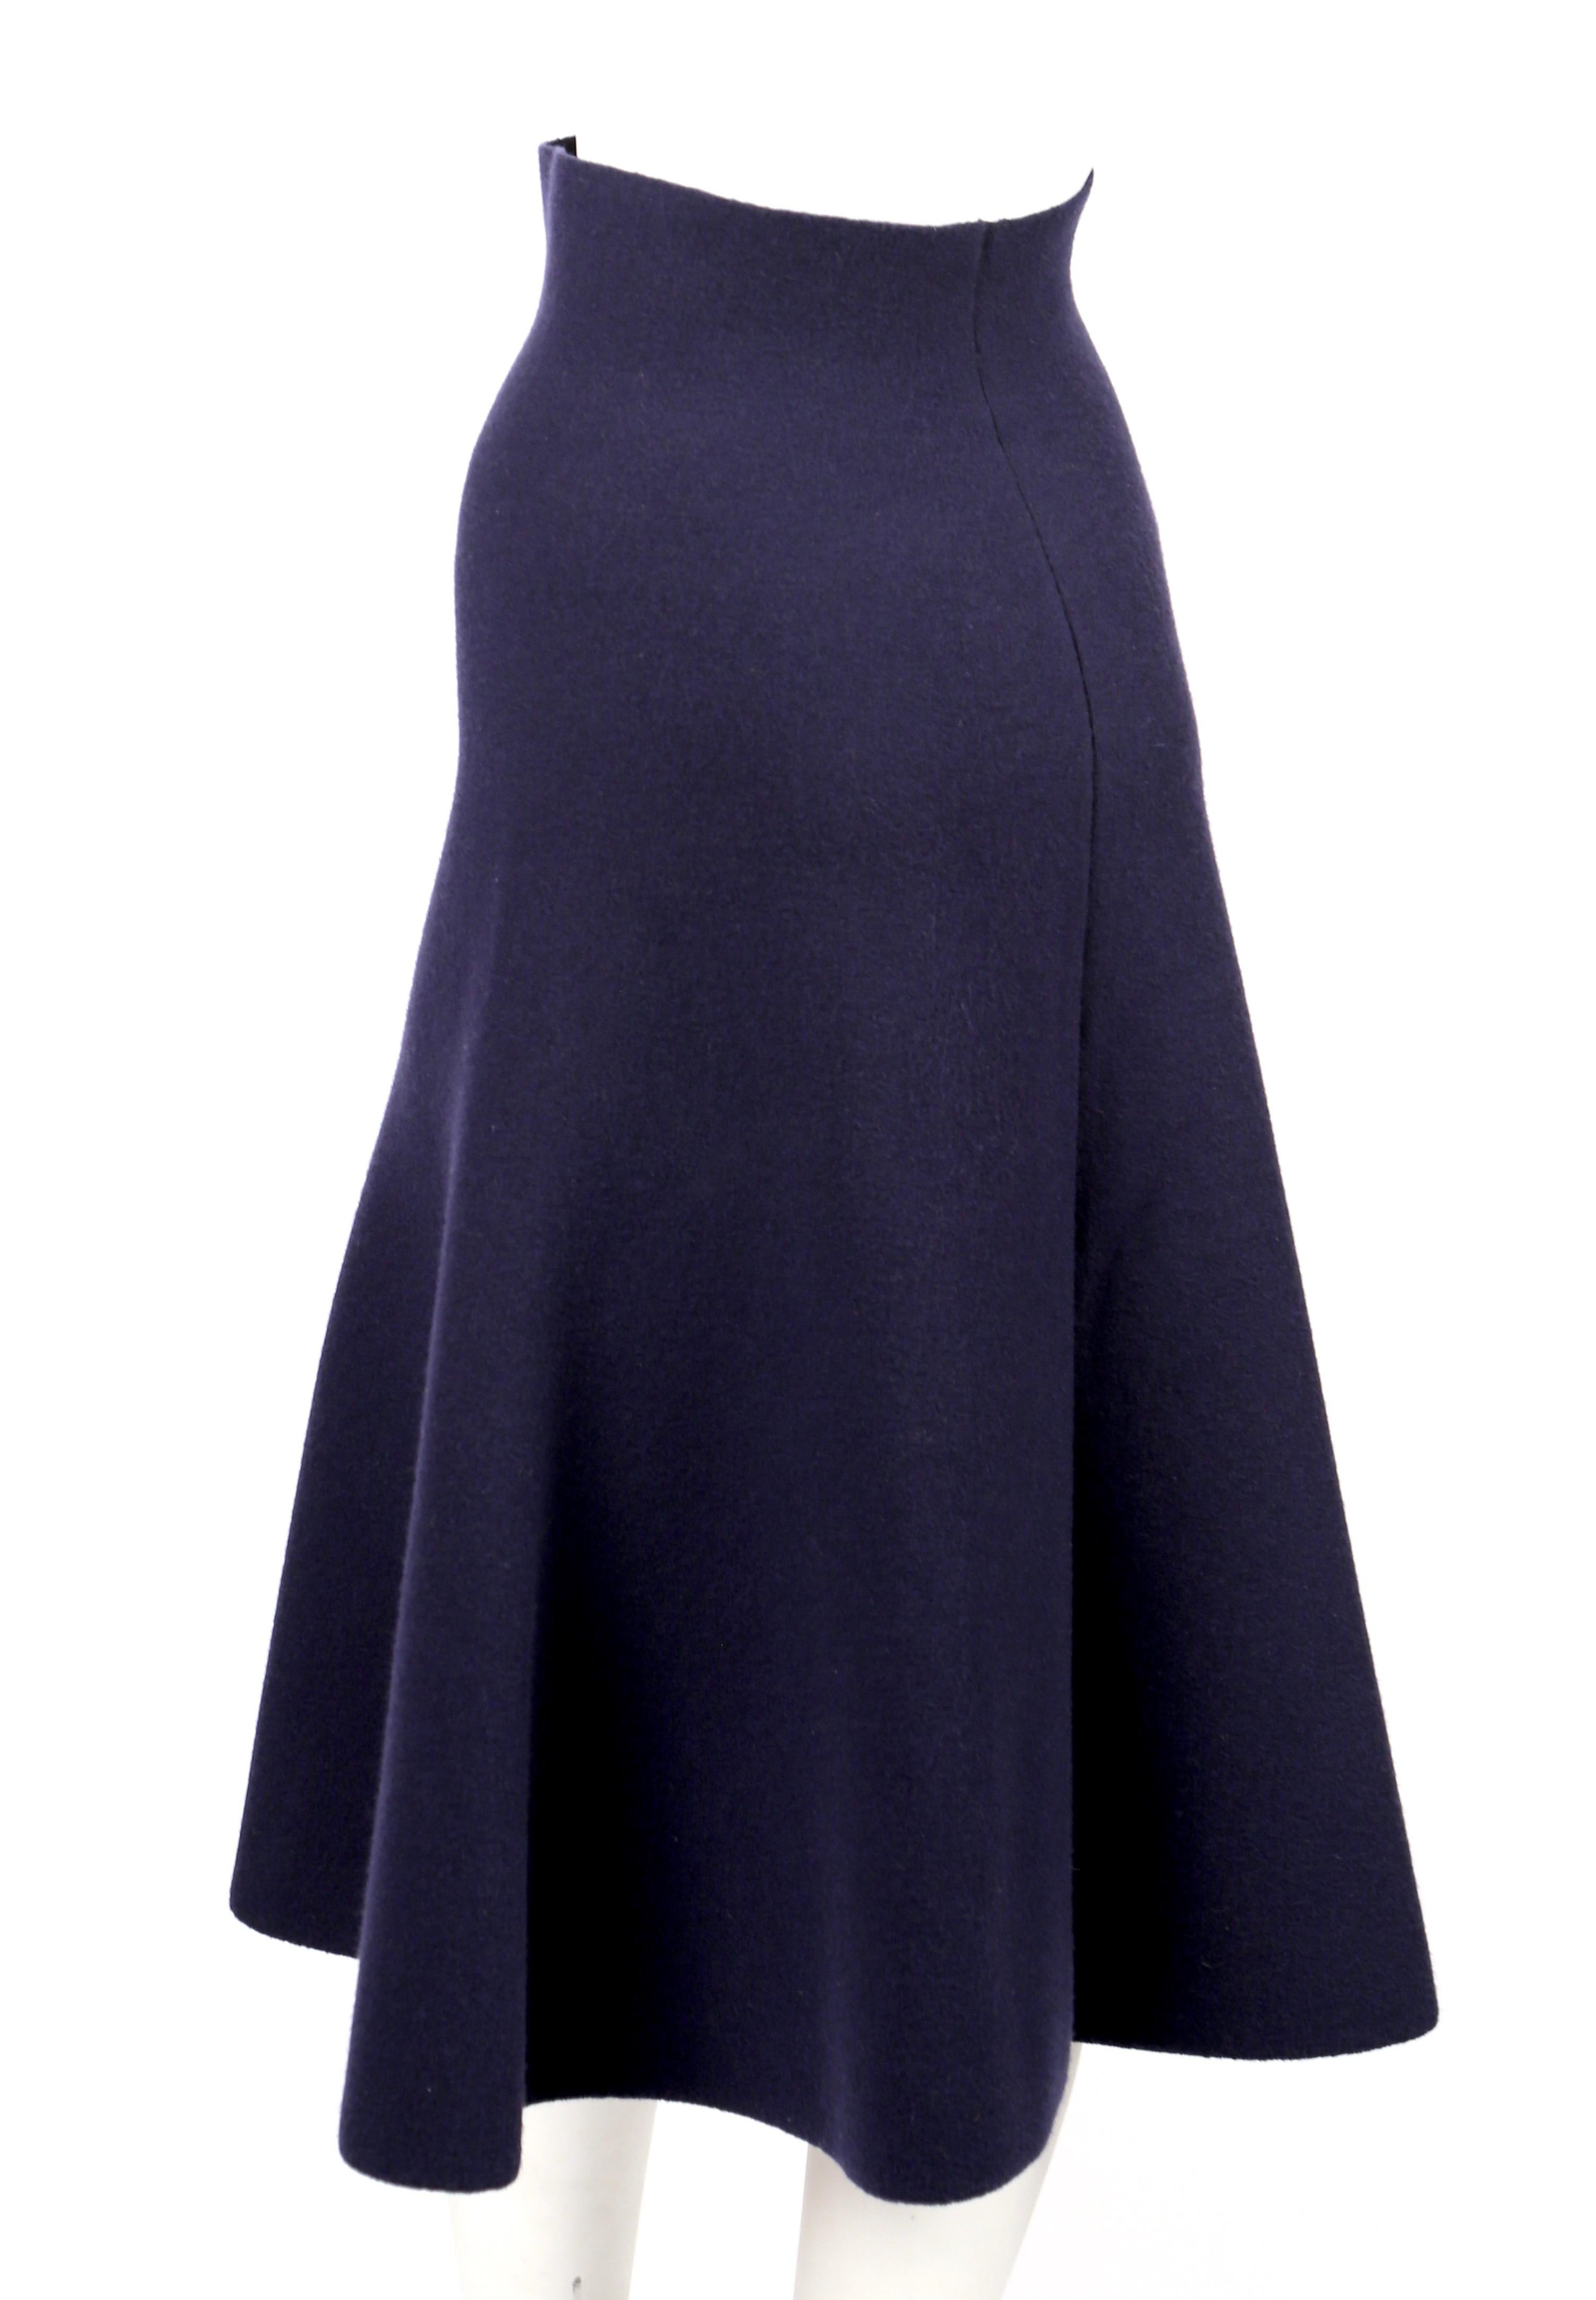 Black CELINE by Phoebe Philo navy blue textured knit trumpet skirt - runway 2013